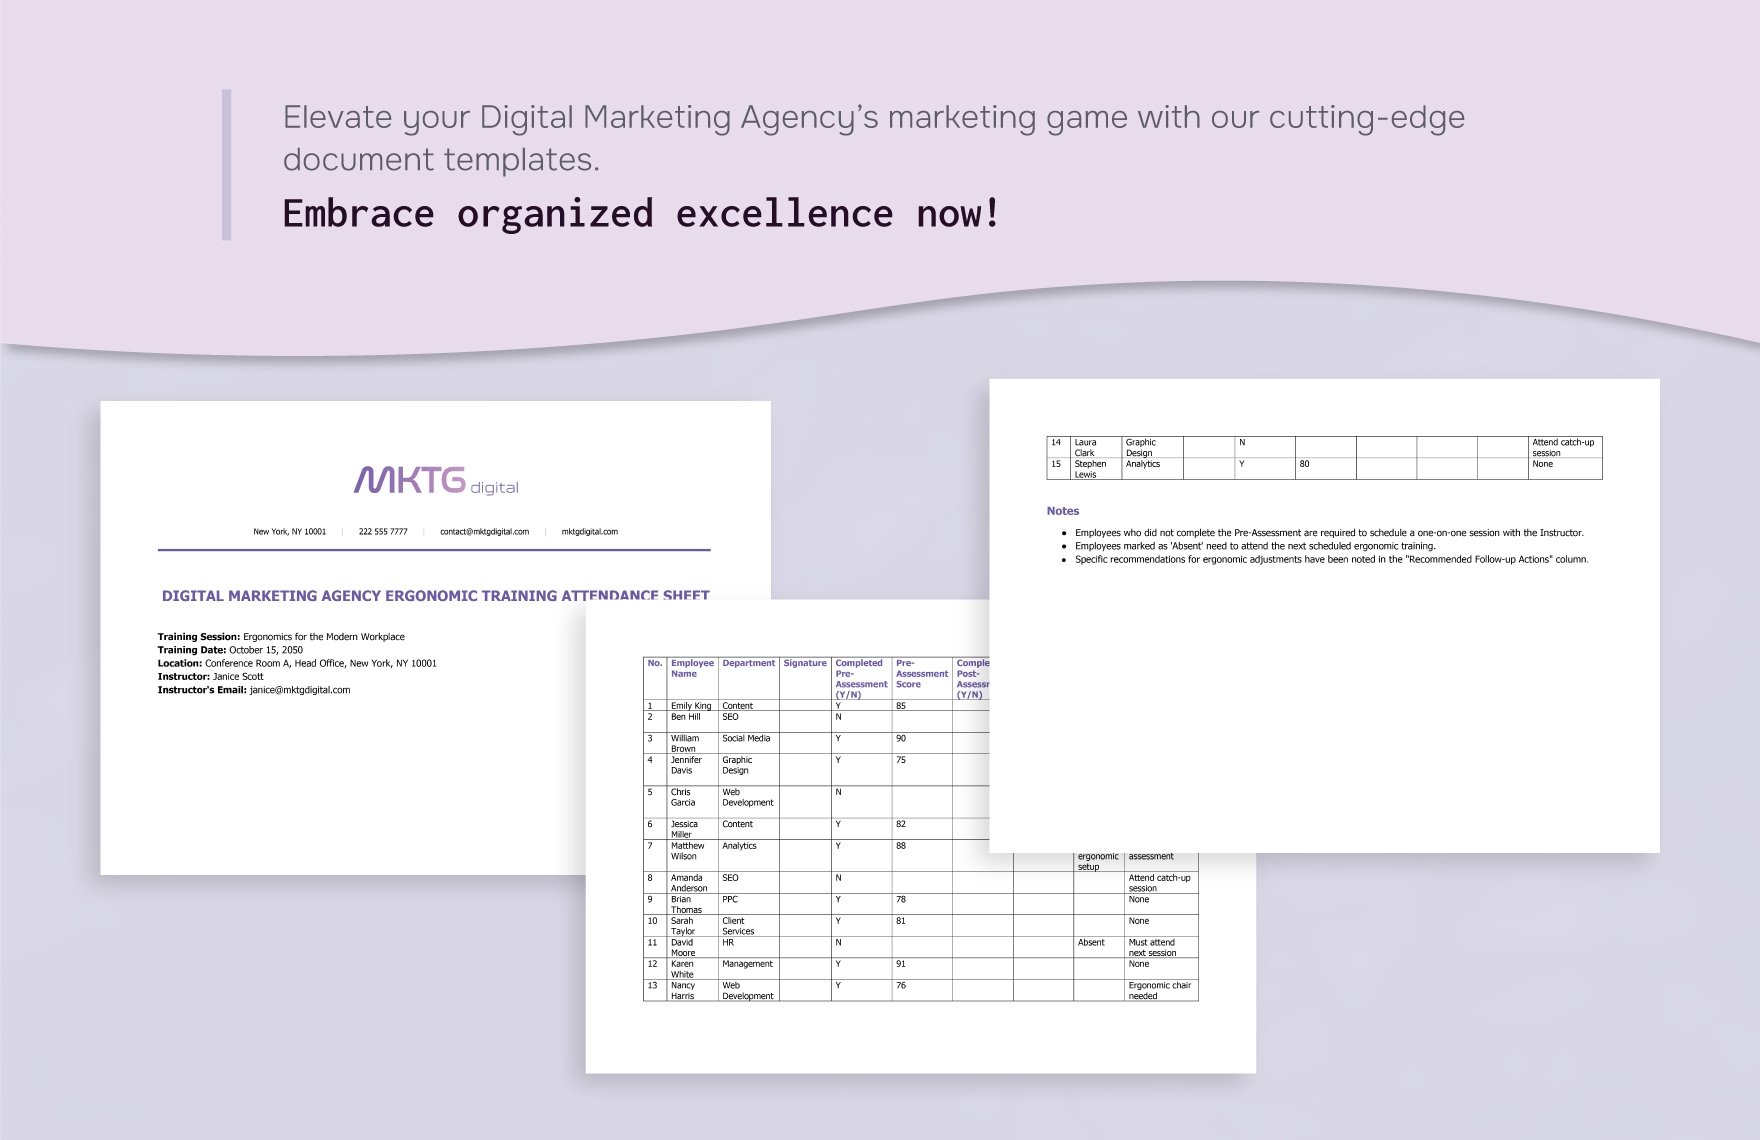 Digital Marketing Agency Ergonomic Training Attendance Sheet Template